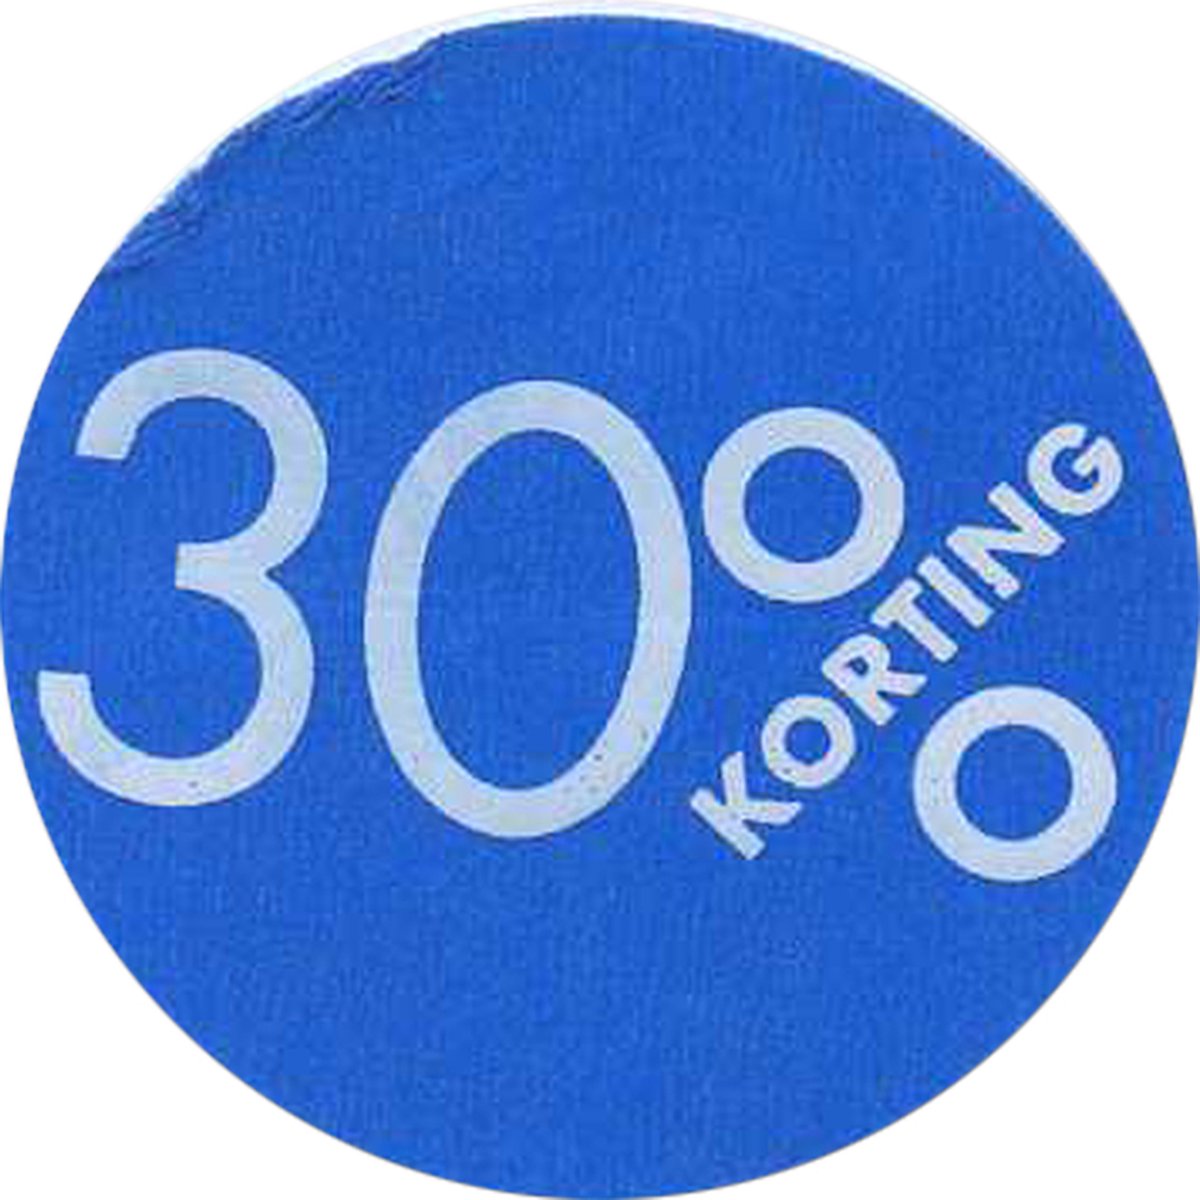 Etiket | Reclame-etiket | papier | 30% korting | ∅30mm | blauw | rol à 250 stuks